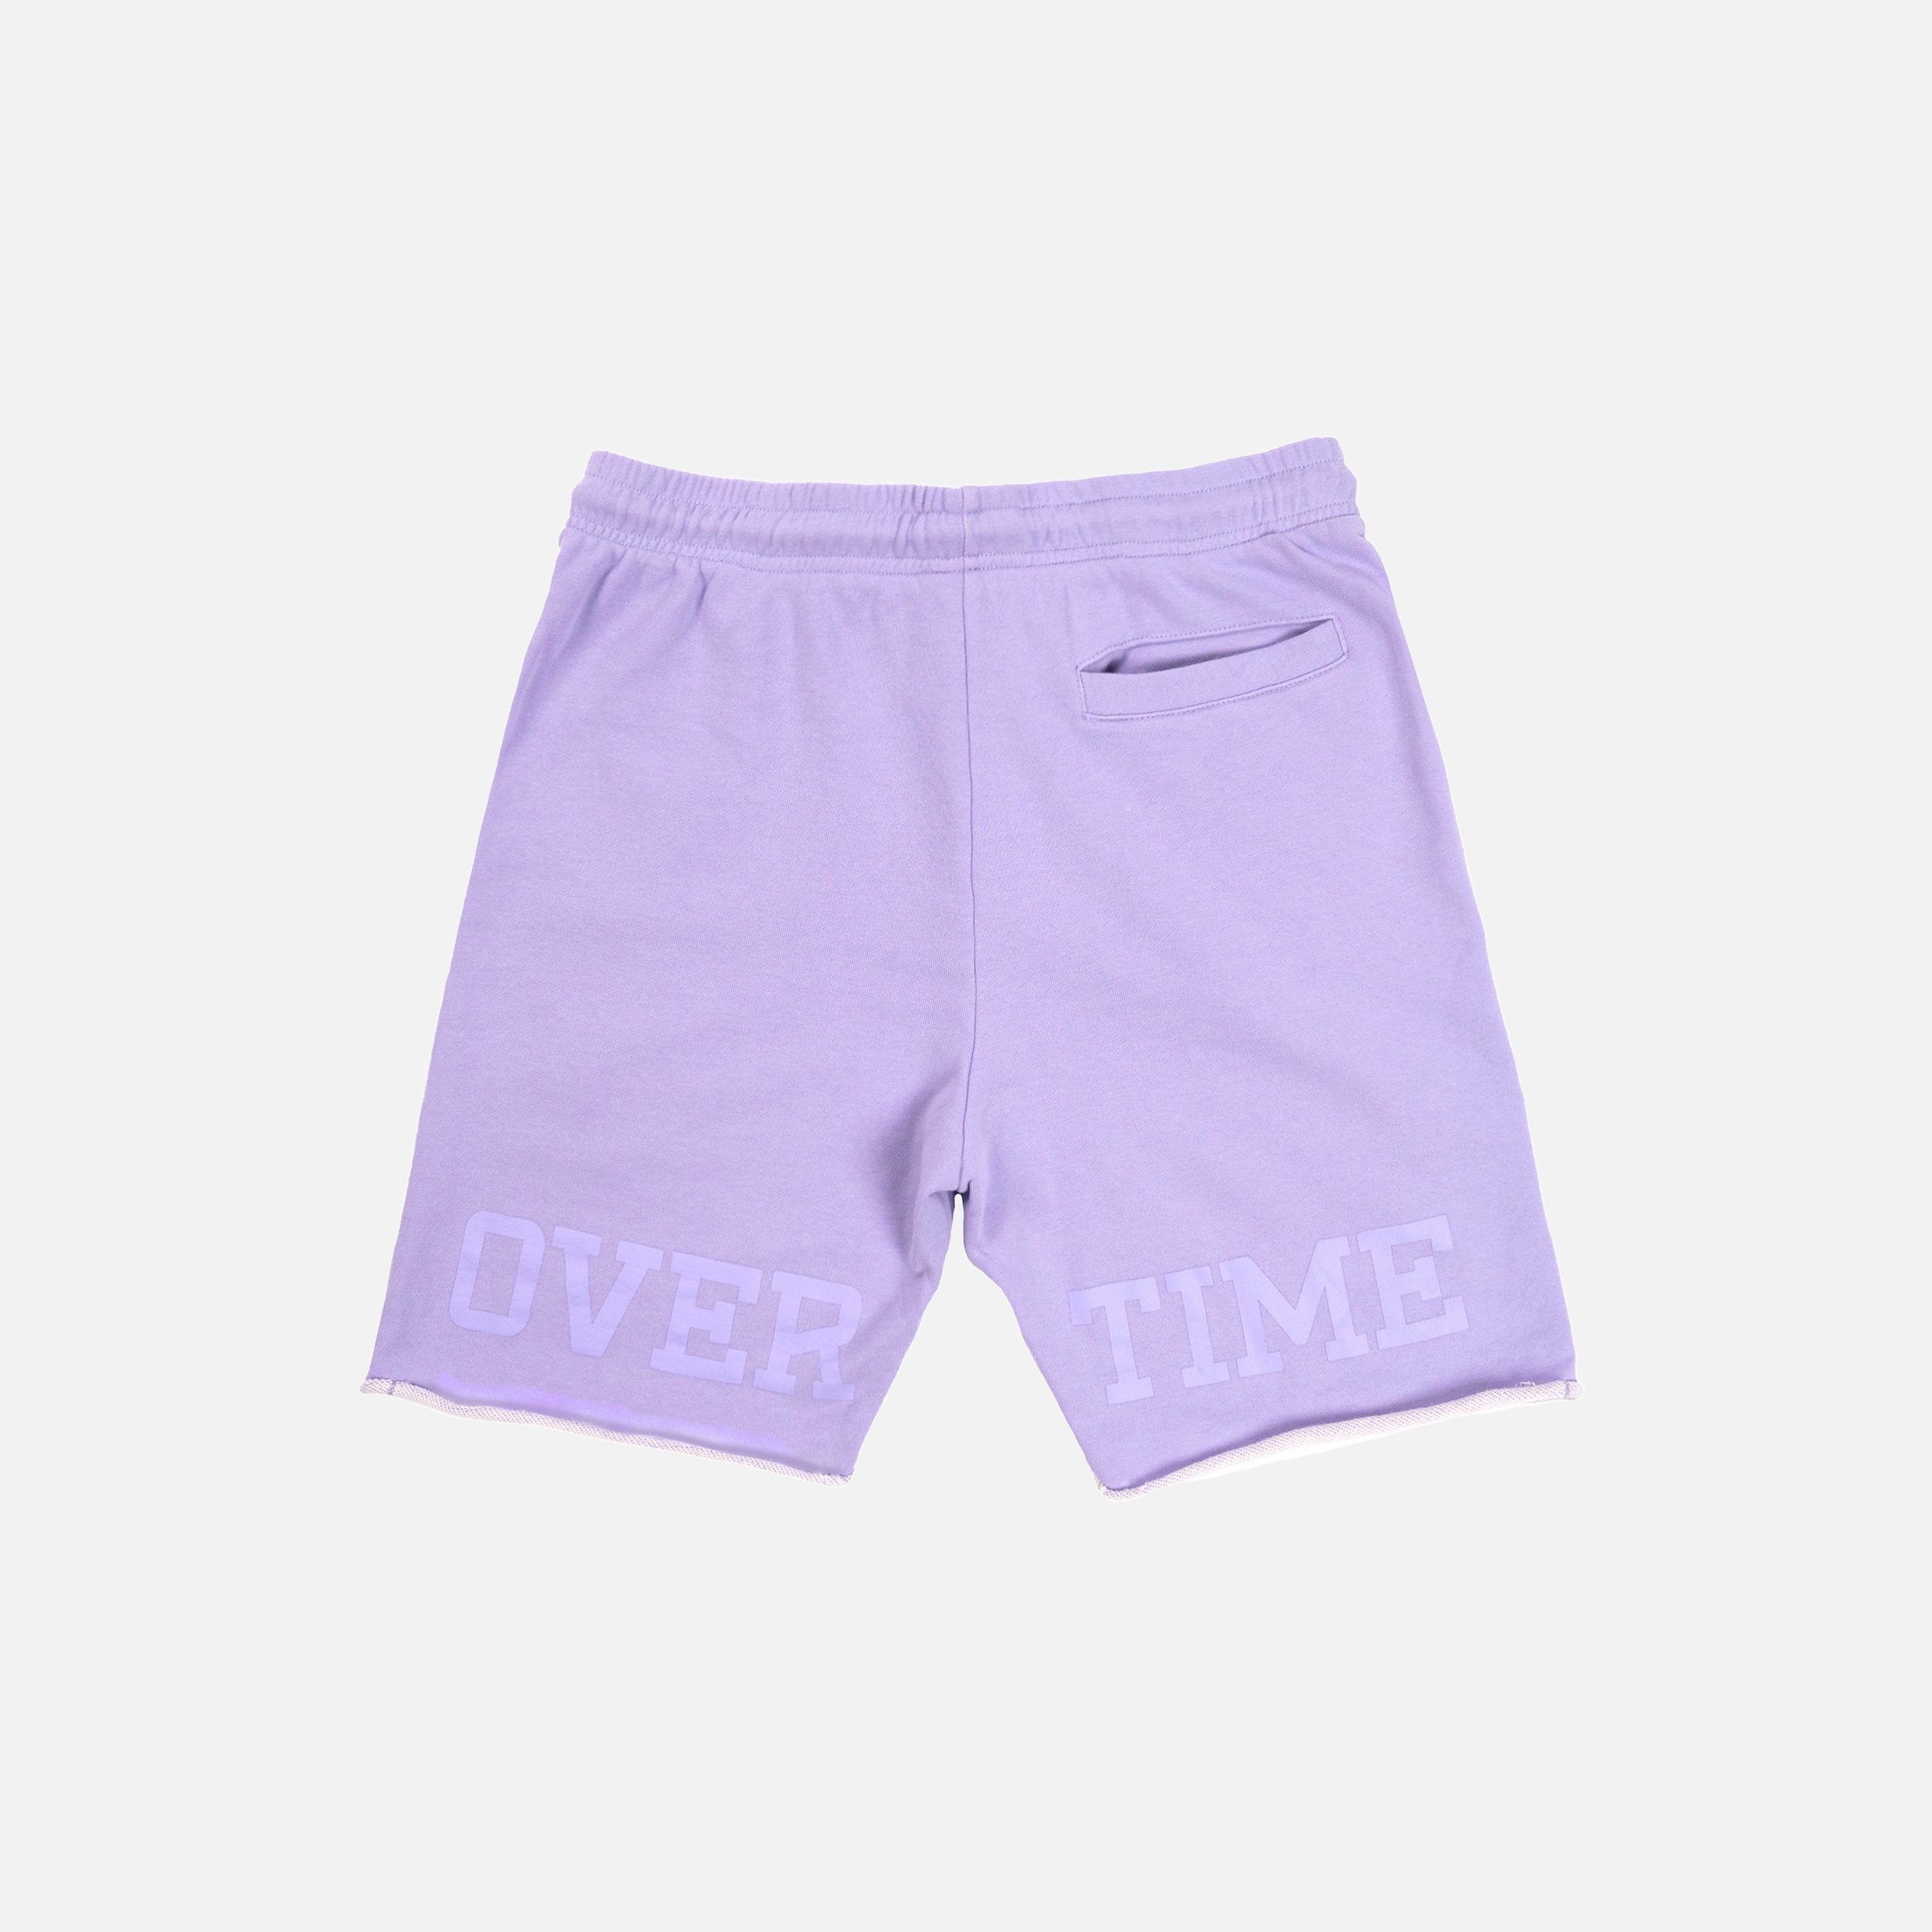 OT Tones Shorts – Overtime